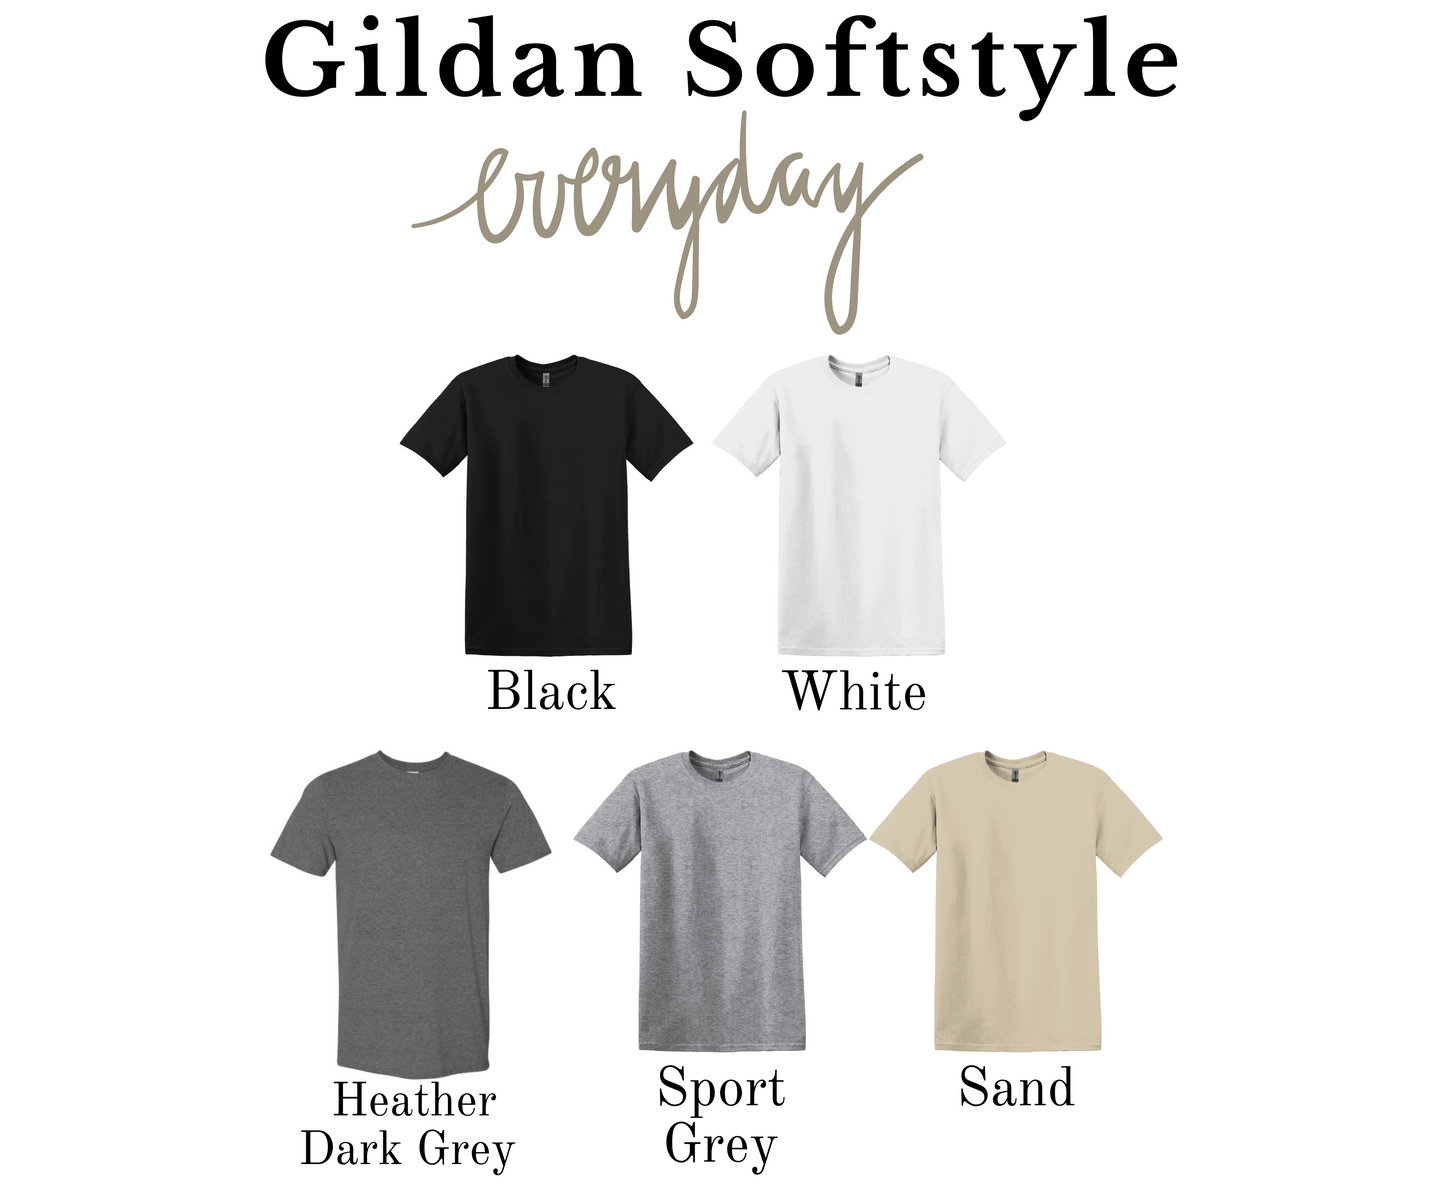 Nightmare Before Coffee Skeleton Gildan Softstyle T-shirt